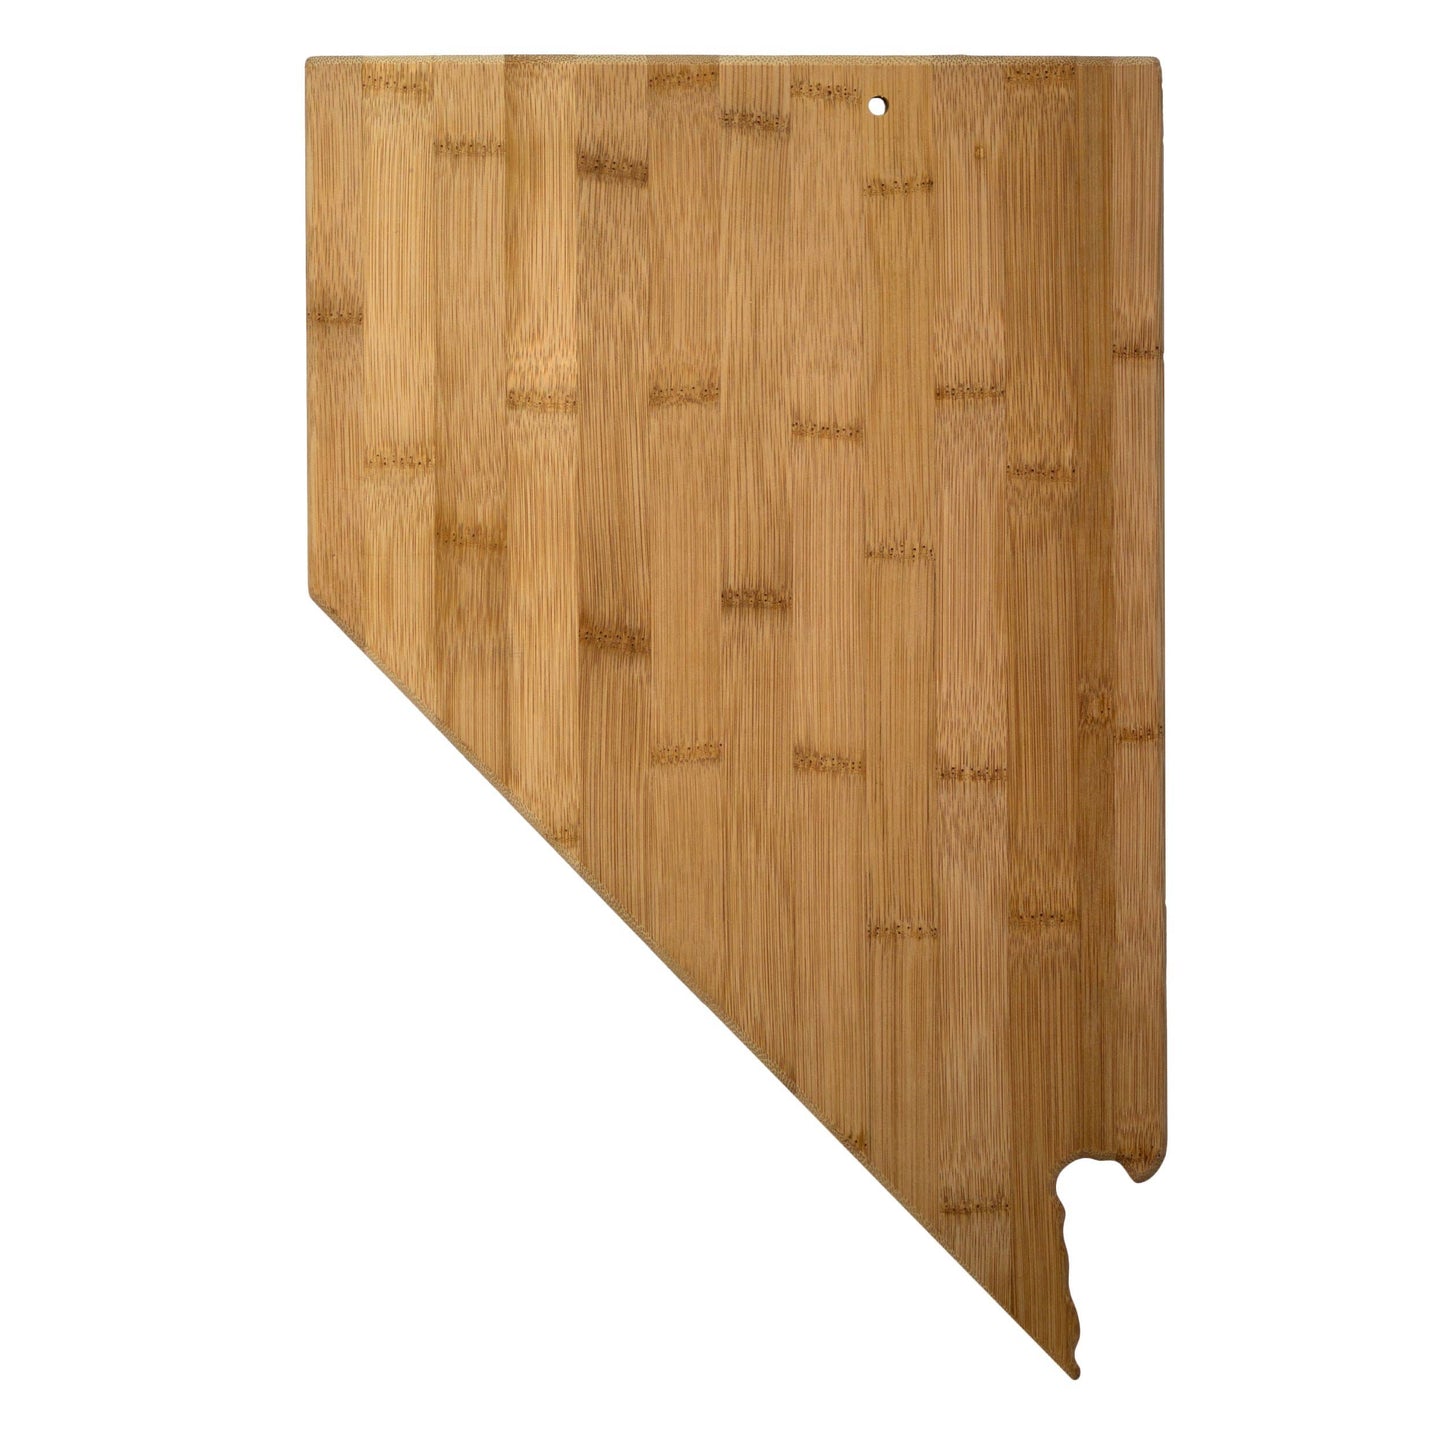 Nevada Shaped Cutting Board